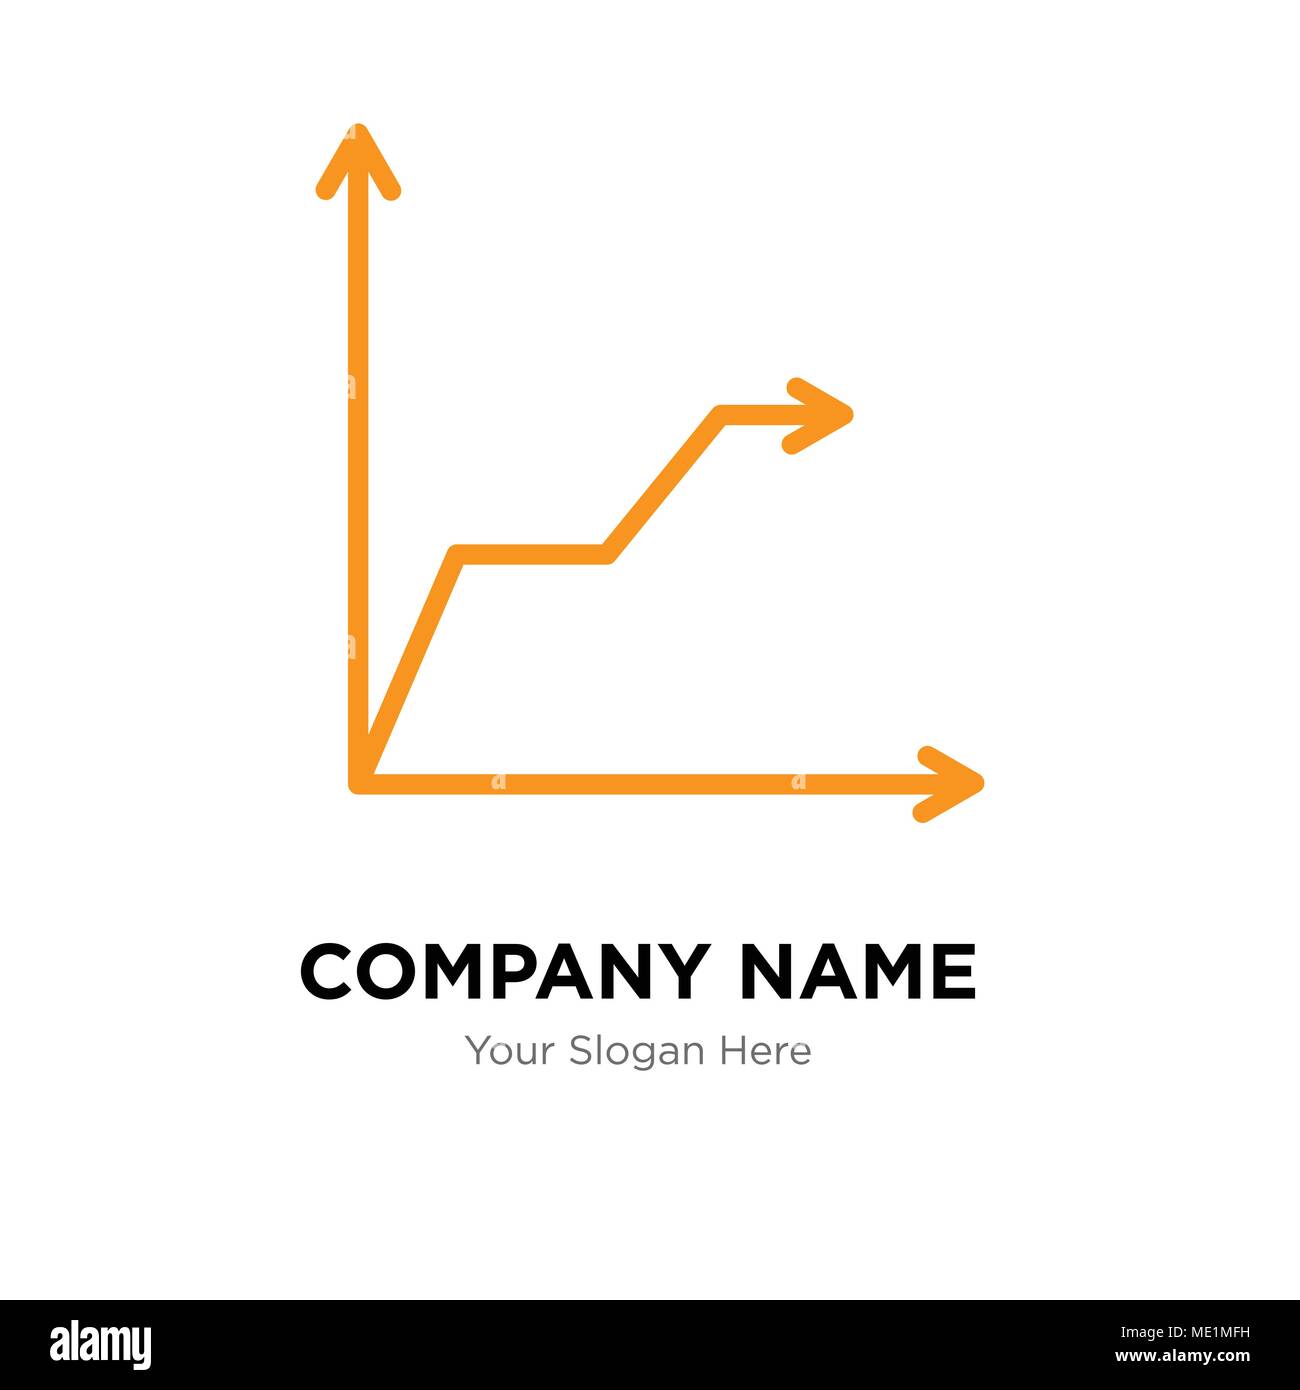 Triangular pyramid company logo design template, Business corporate vector icon Stock Vector